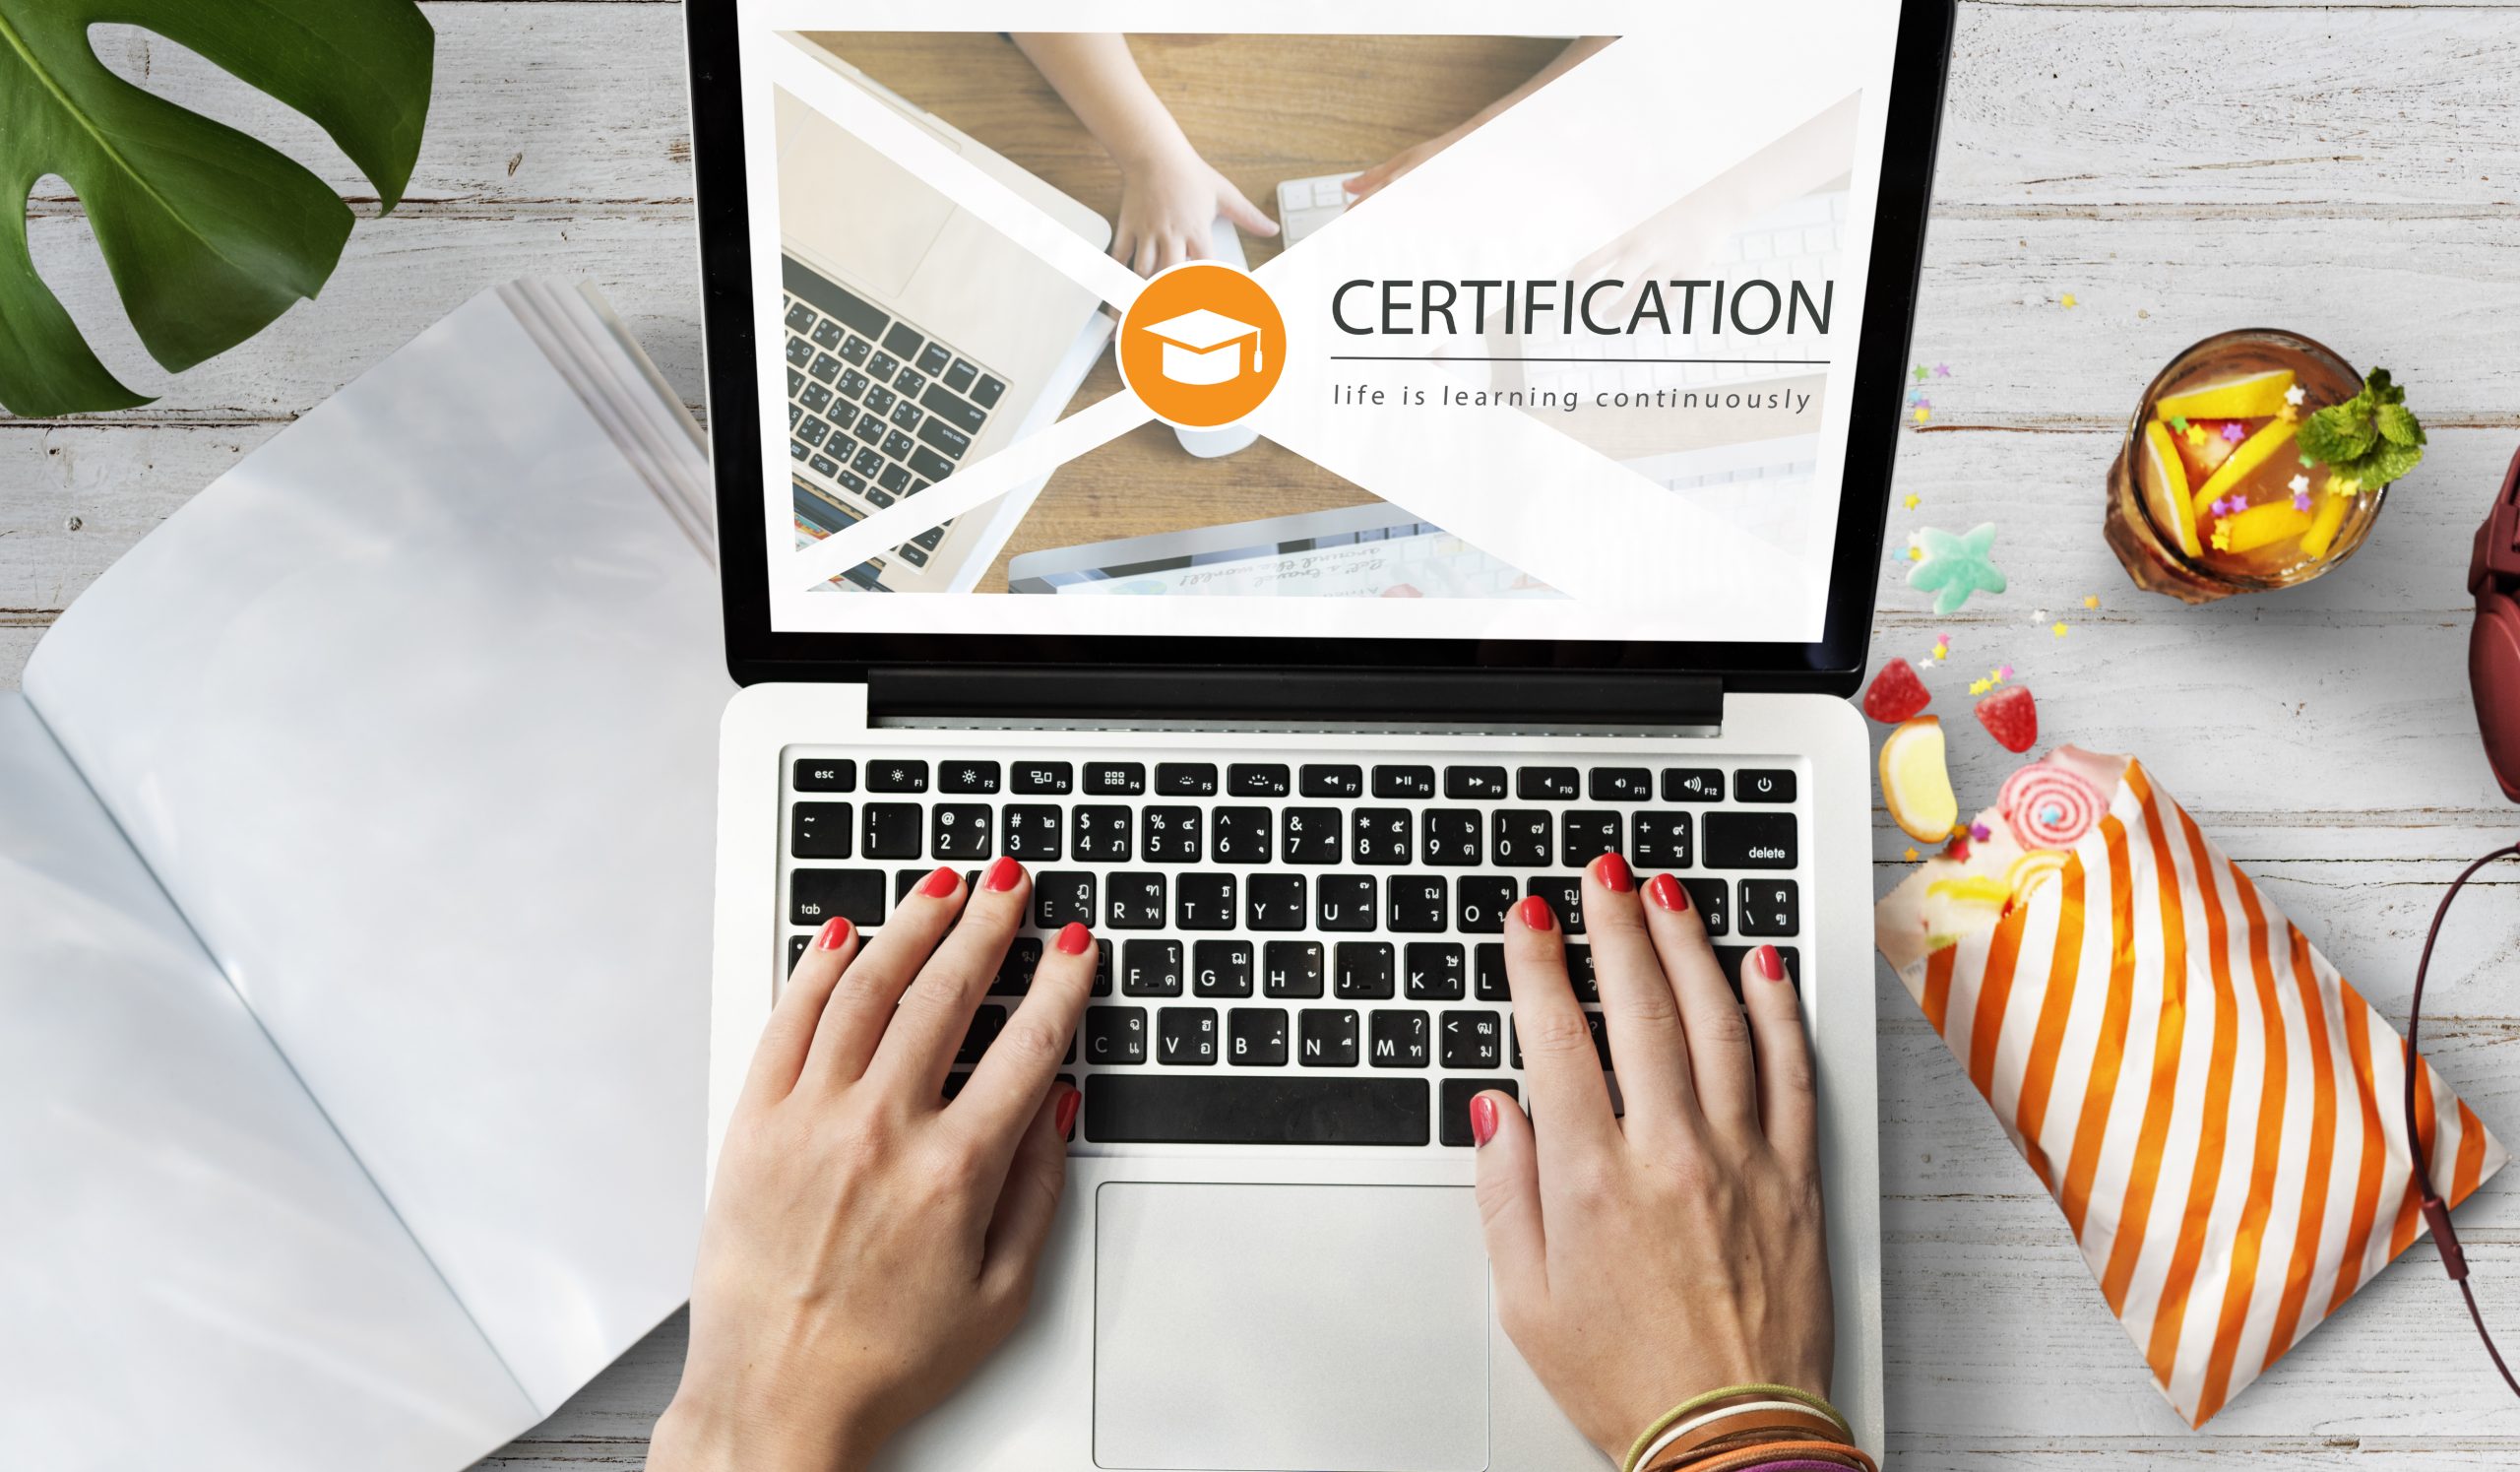 online certification using a laptop